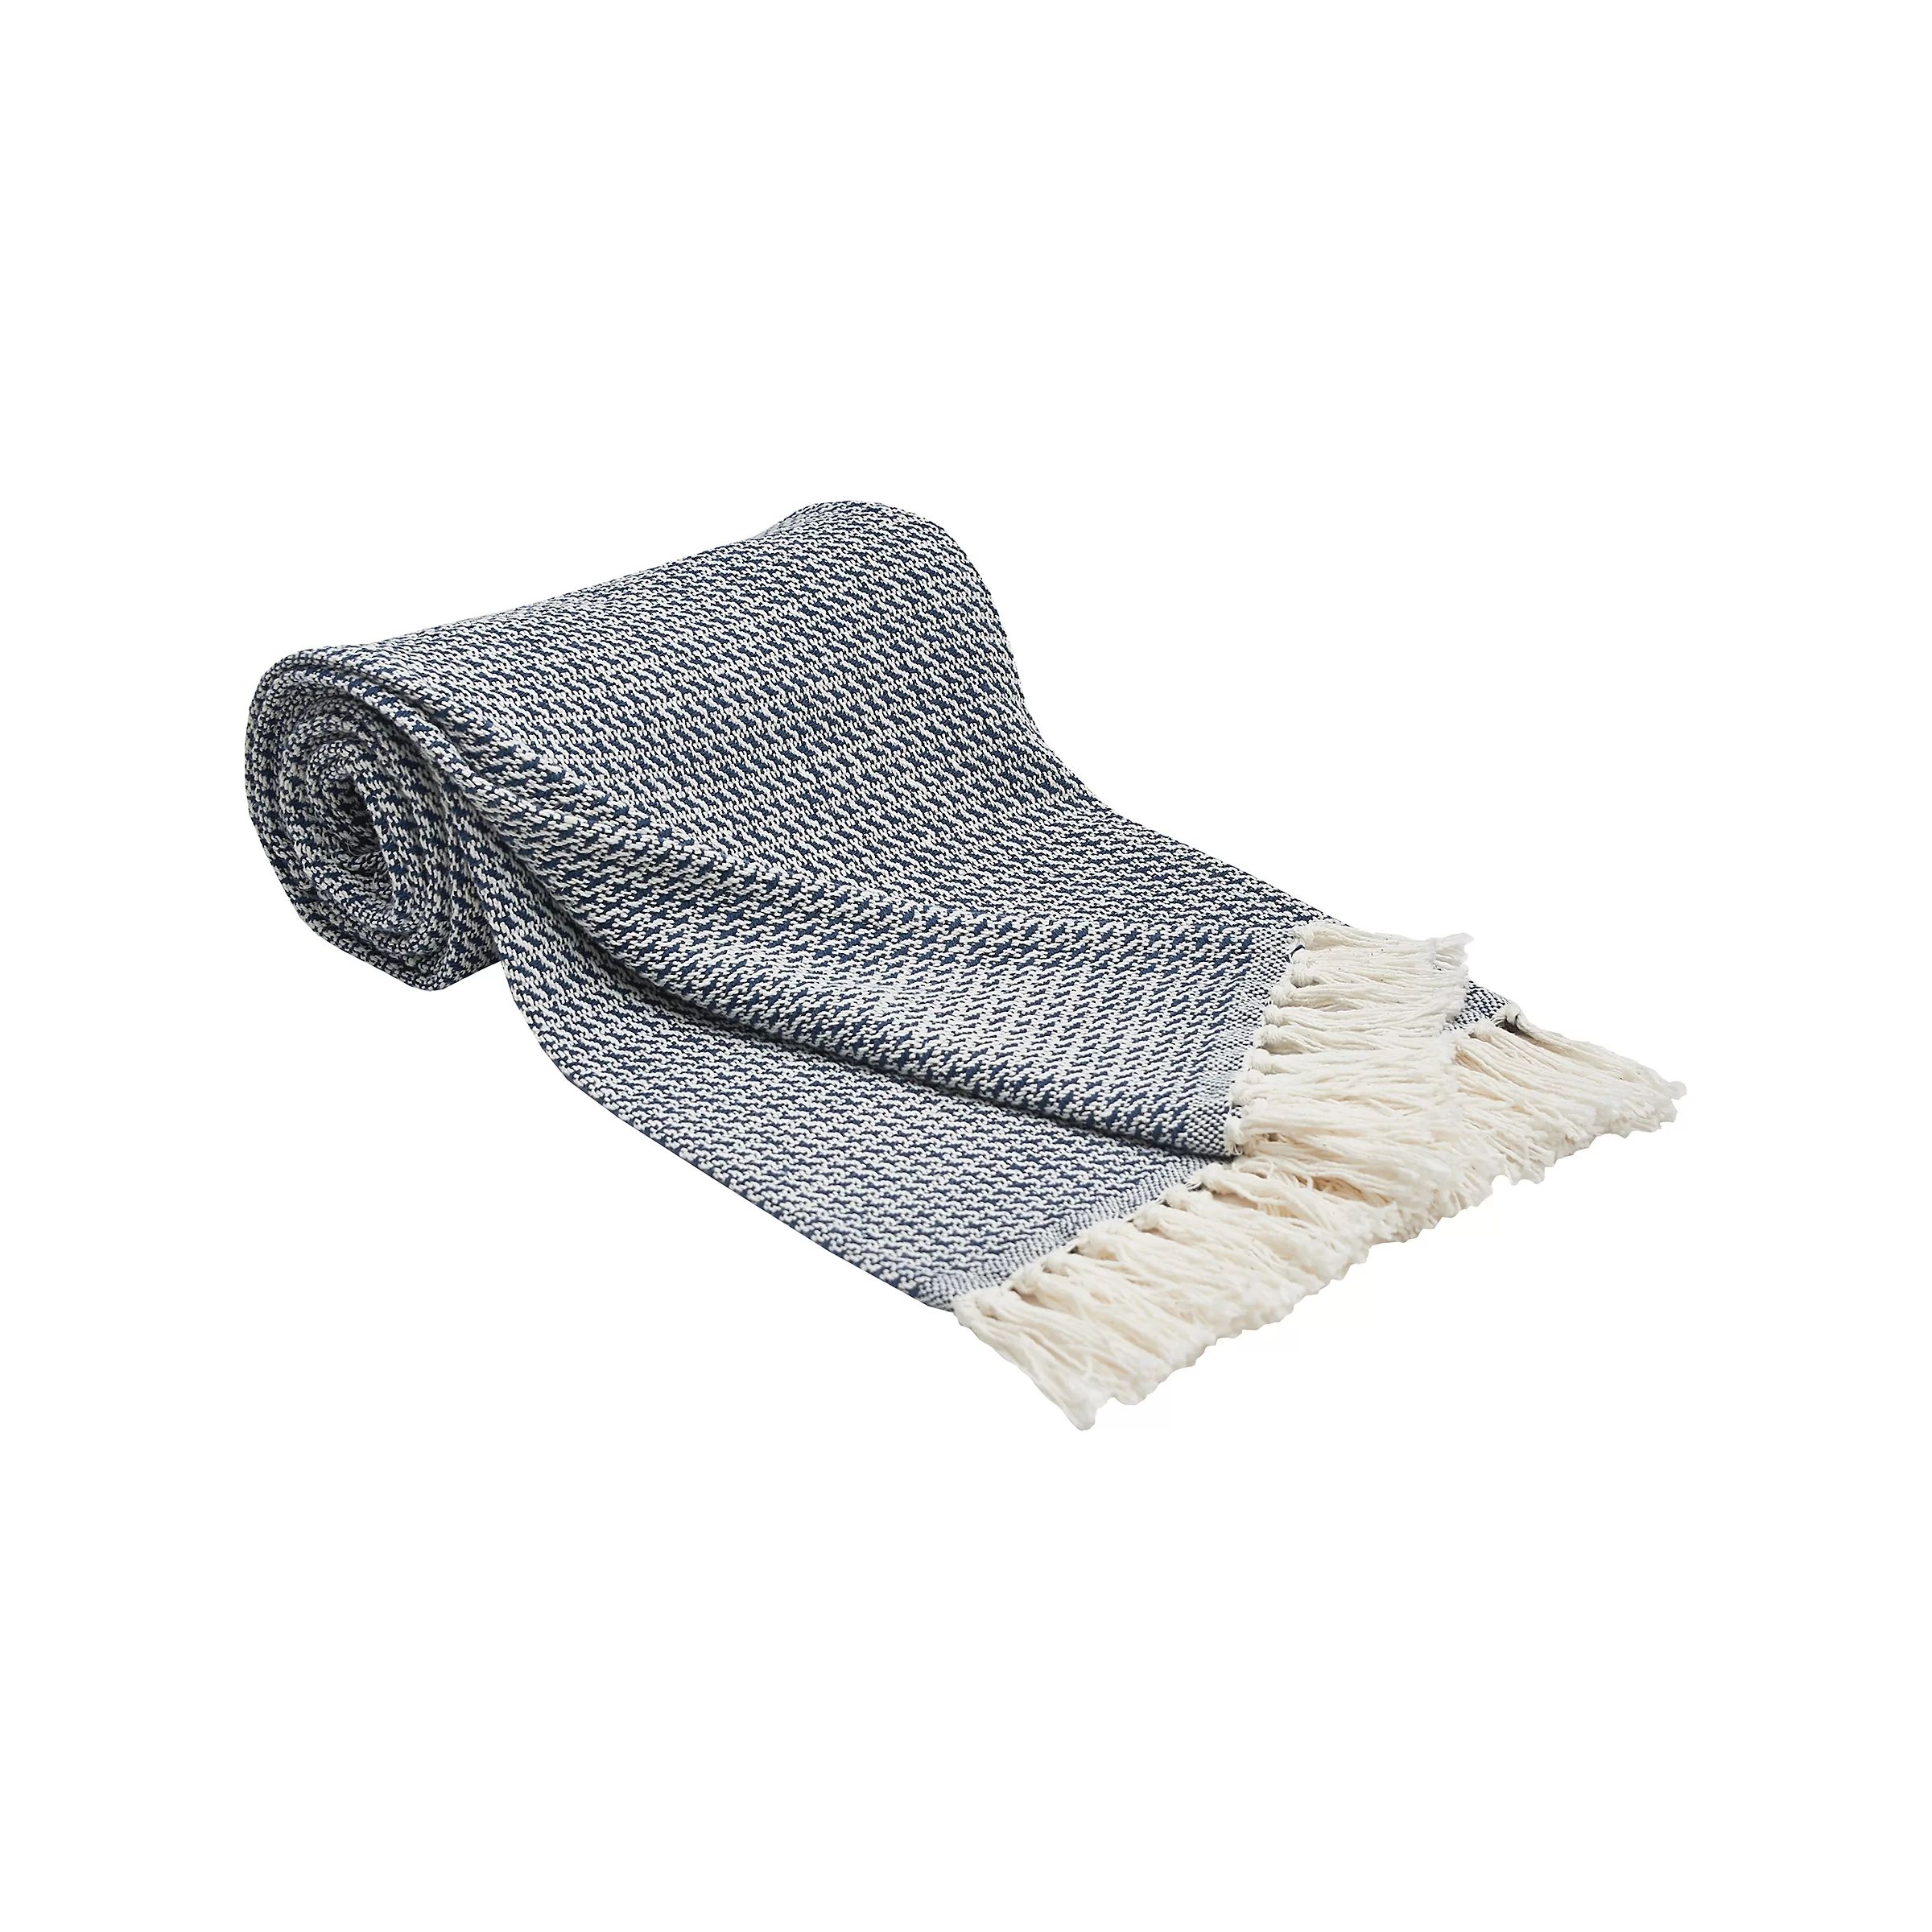 Ingrassellino 100% Cotton Blanket | Wayfair North America